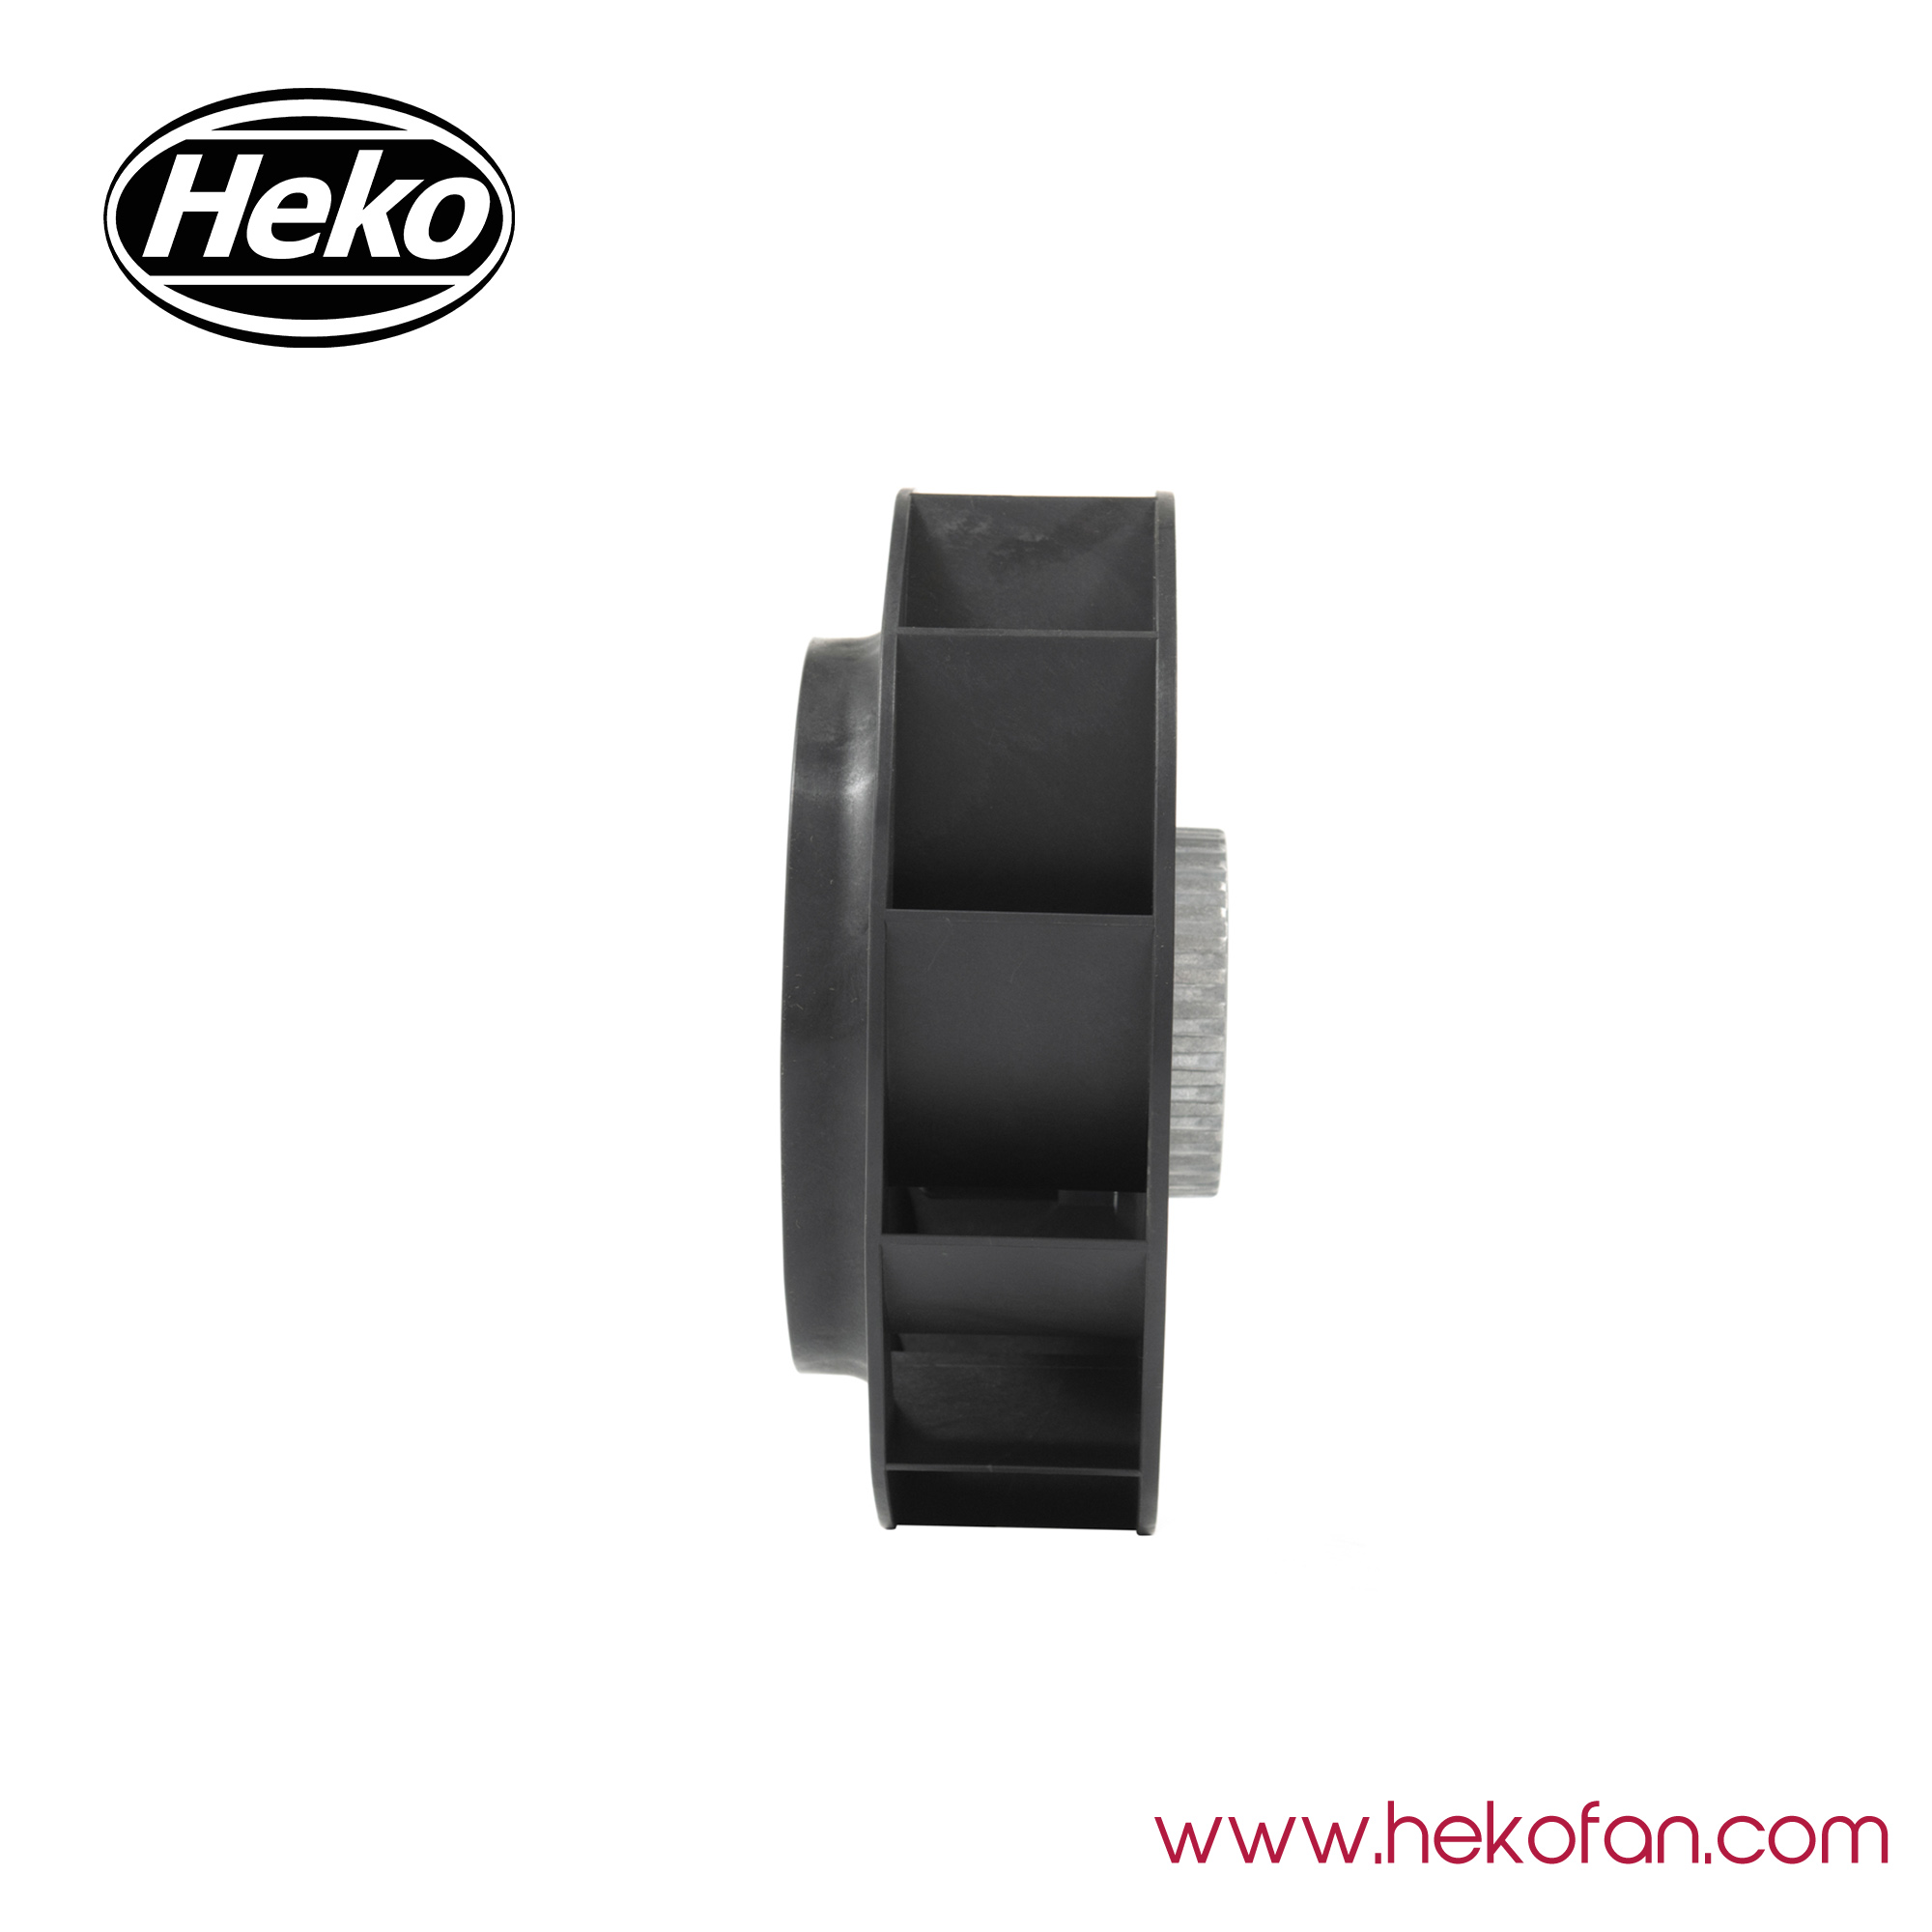 HEKO DC190mm Industrial Centrifugal Fan